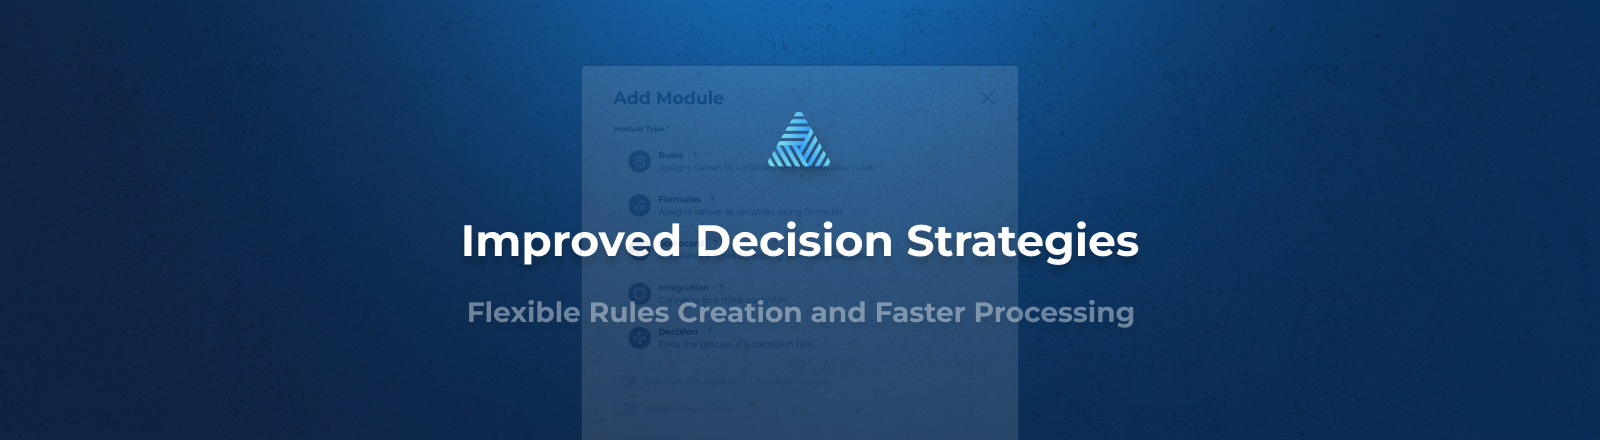 DigiFi New Version: Decision Strategies